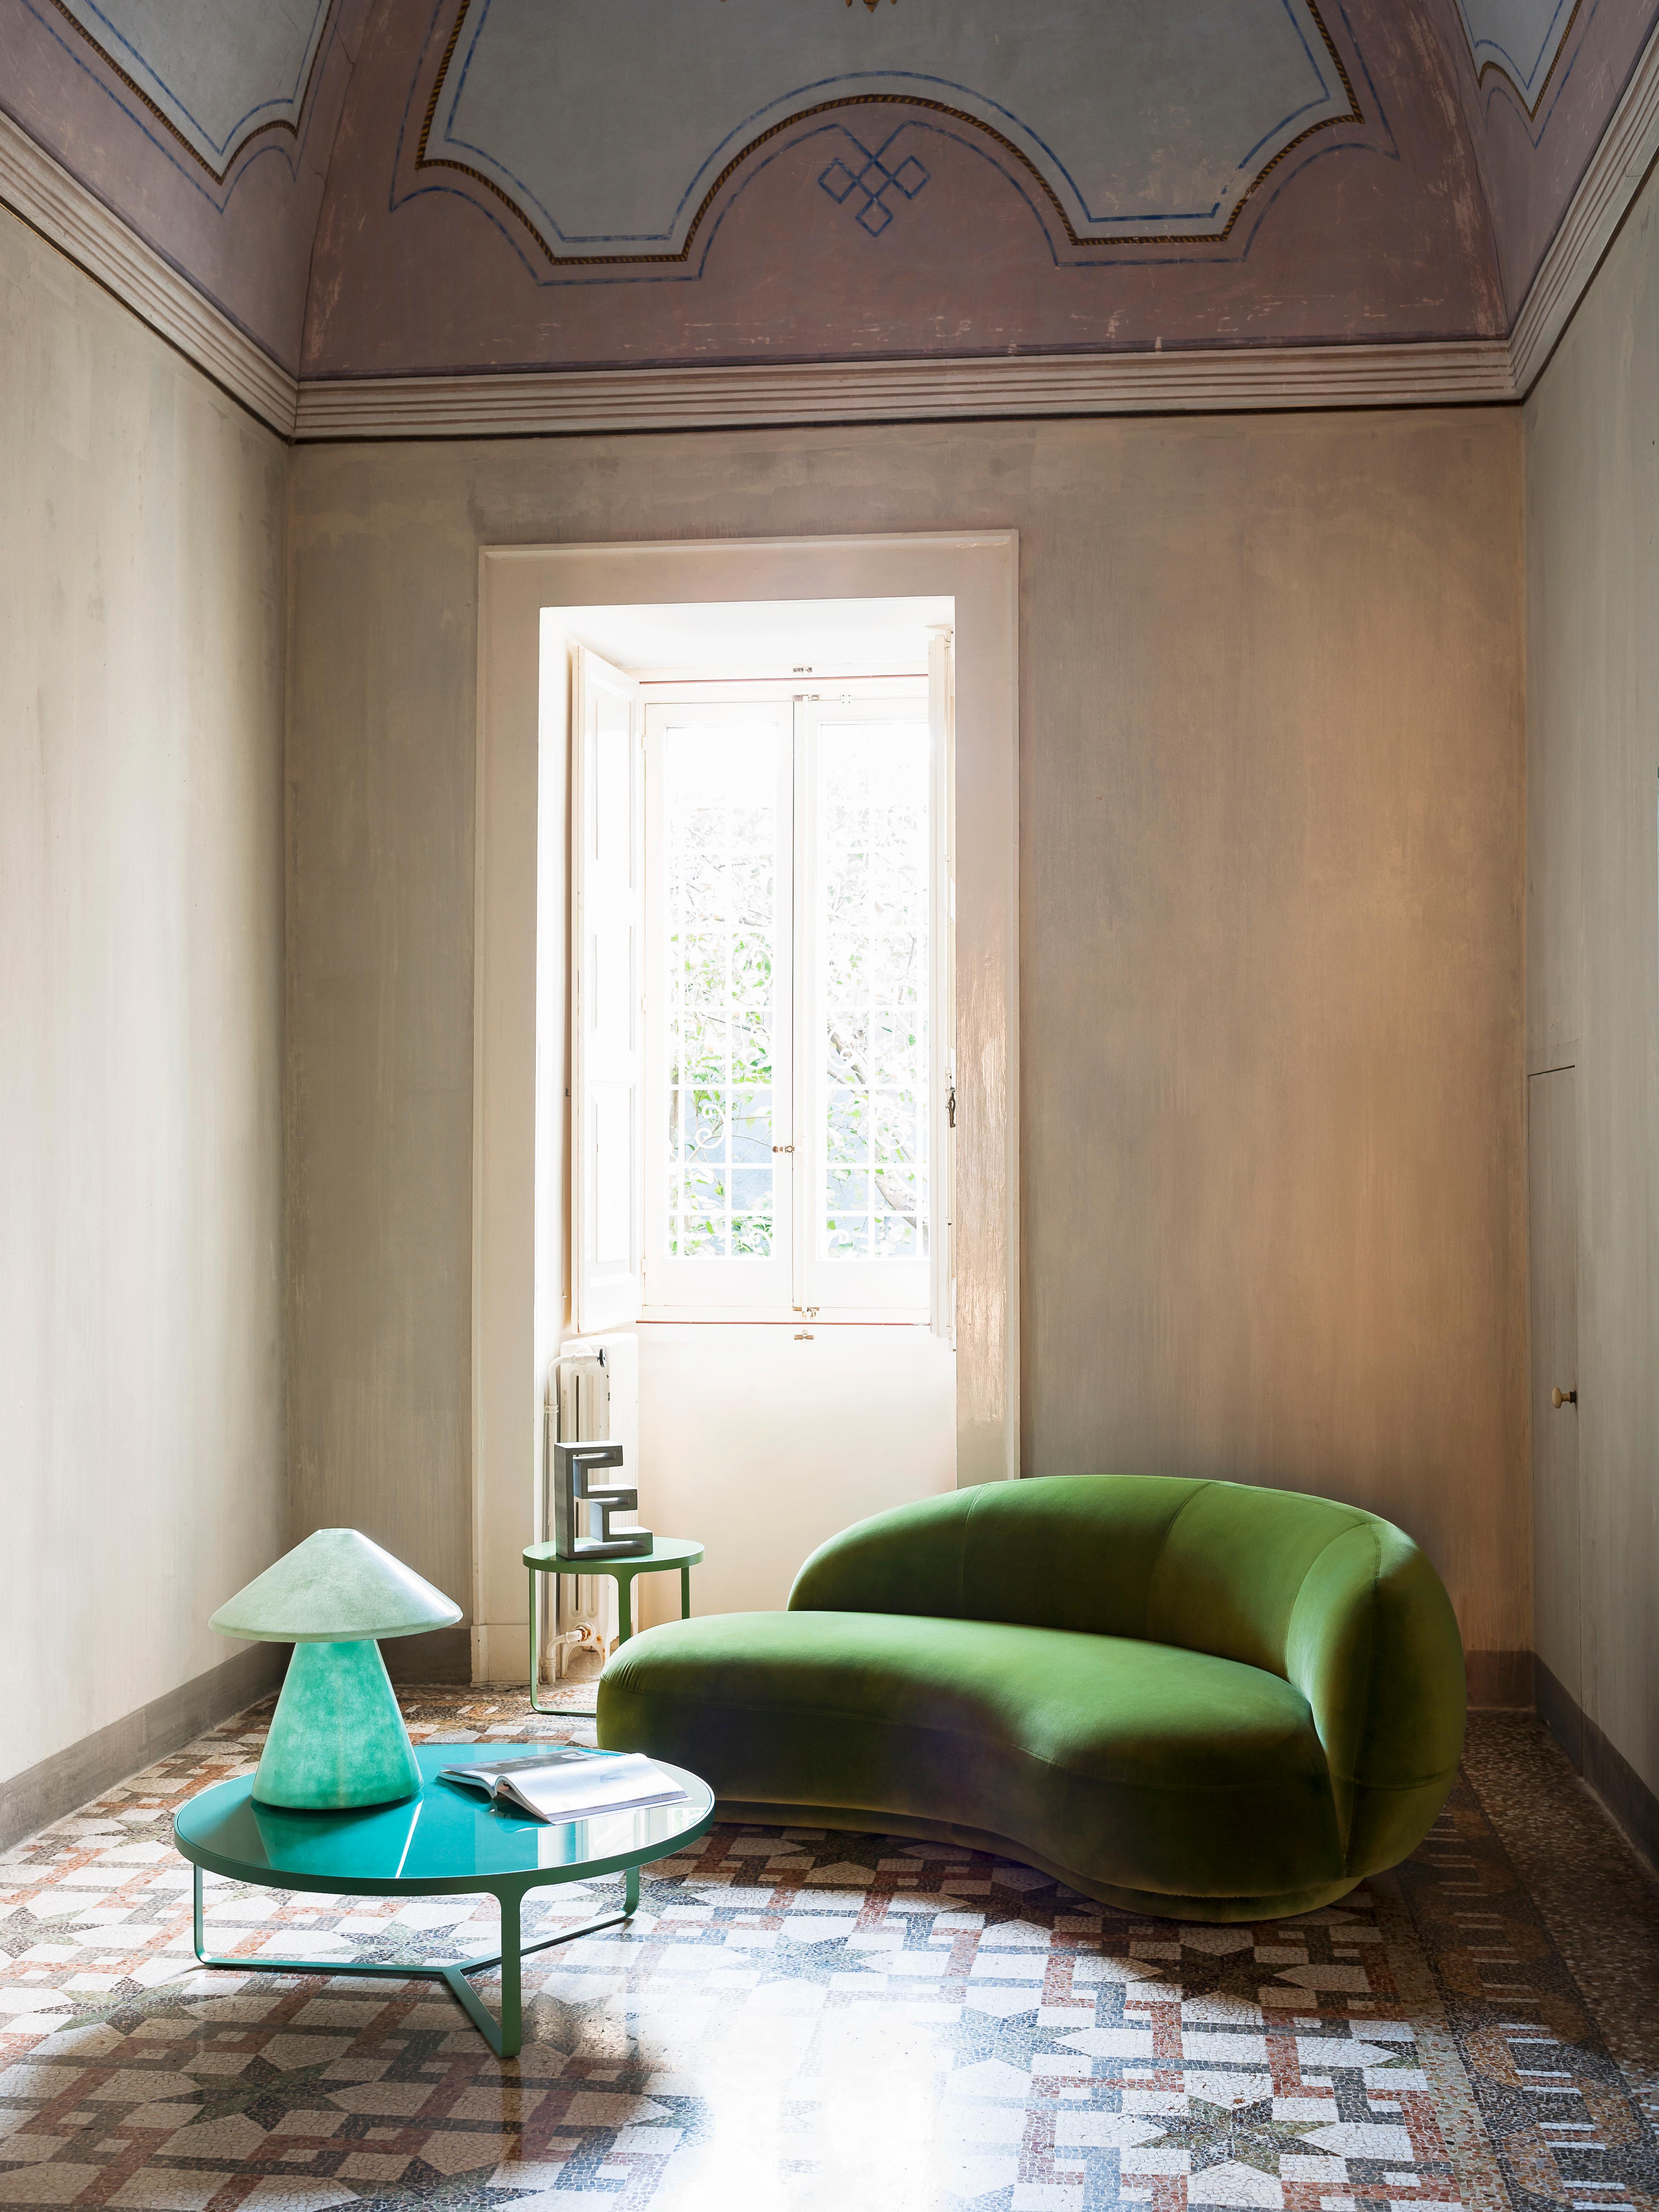 Upholstery Tacchini Julep Soft Sofa by Jonas Wagell